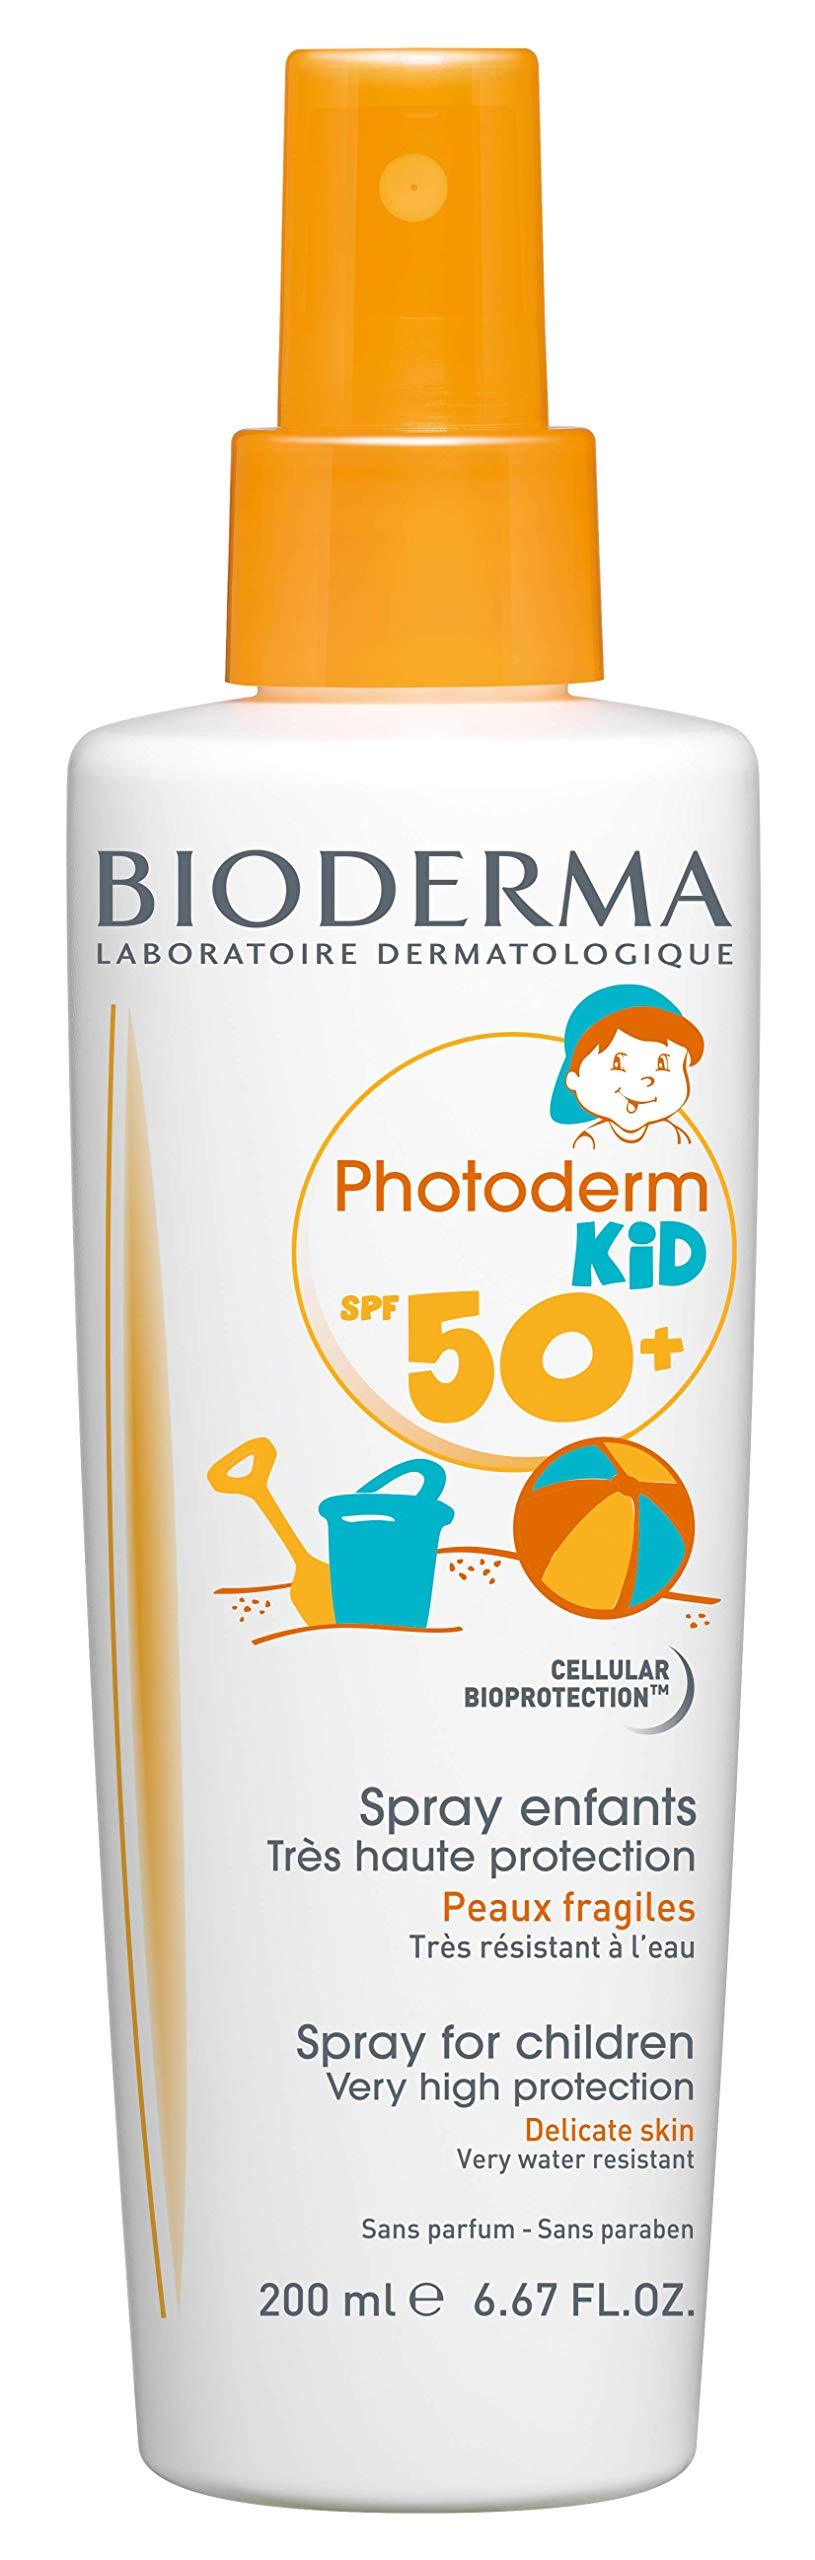 Bioderma PHOTODERM KID SPRAY SPF50+ - NewNest Australia